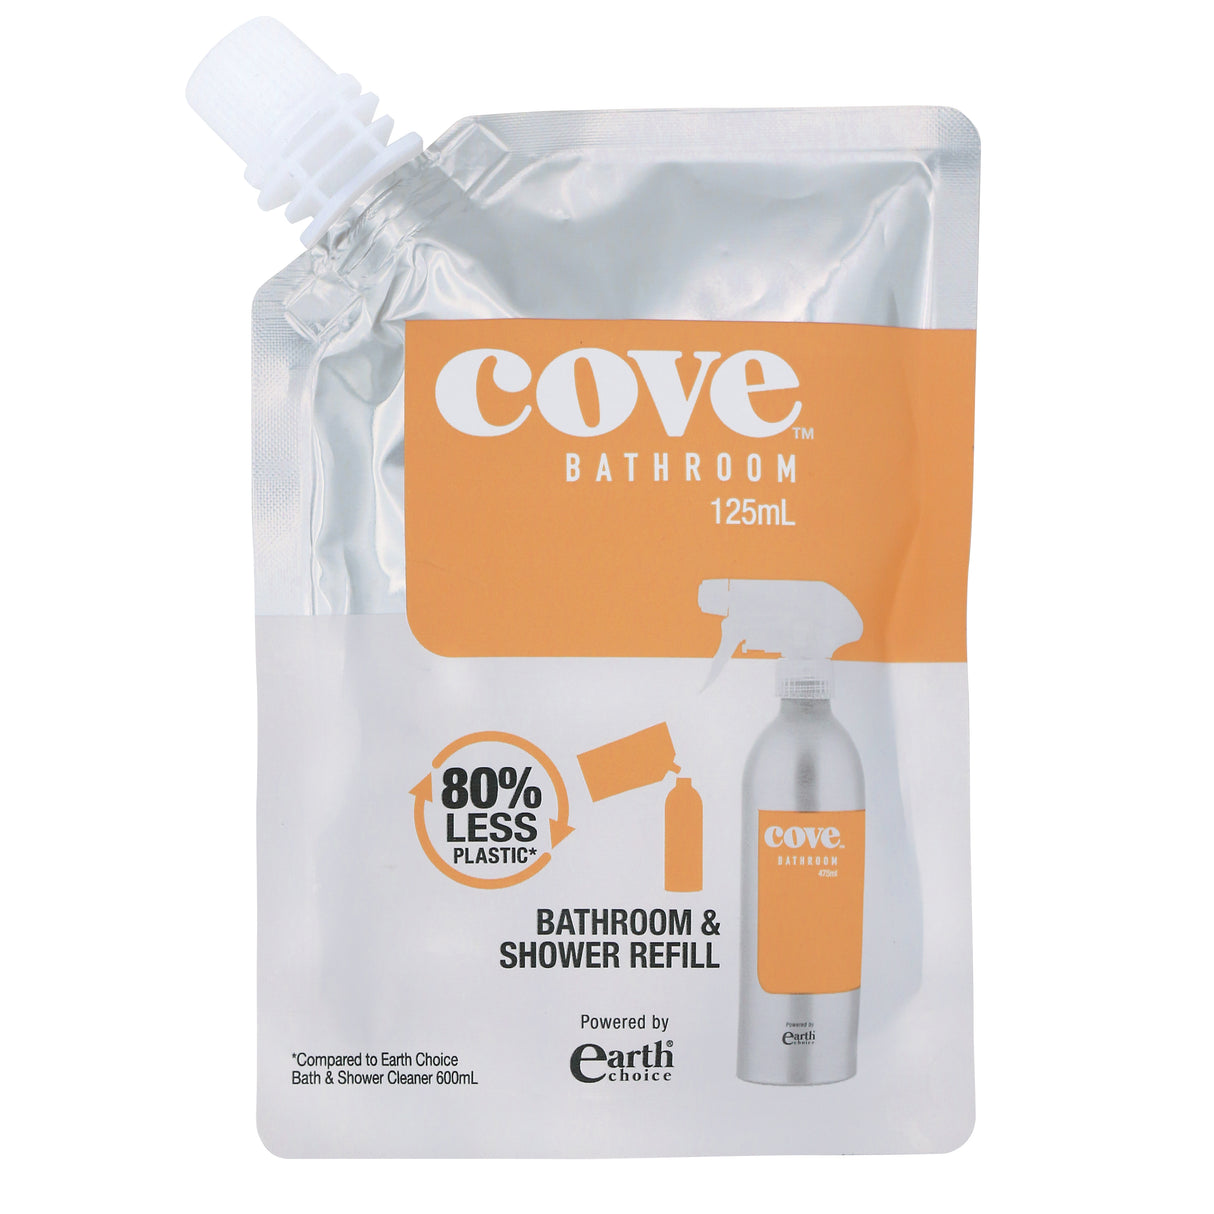 Cove Bathroom & Shower Refill 125ml